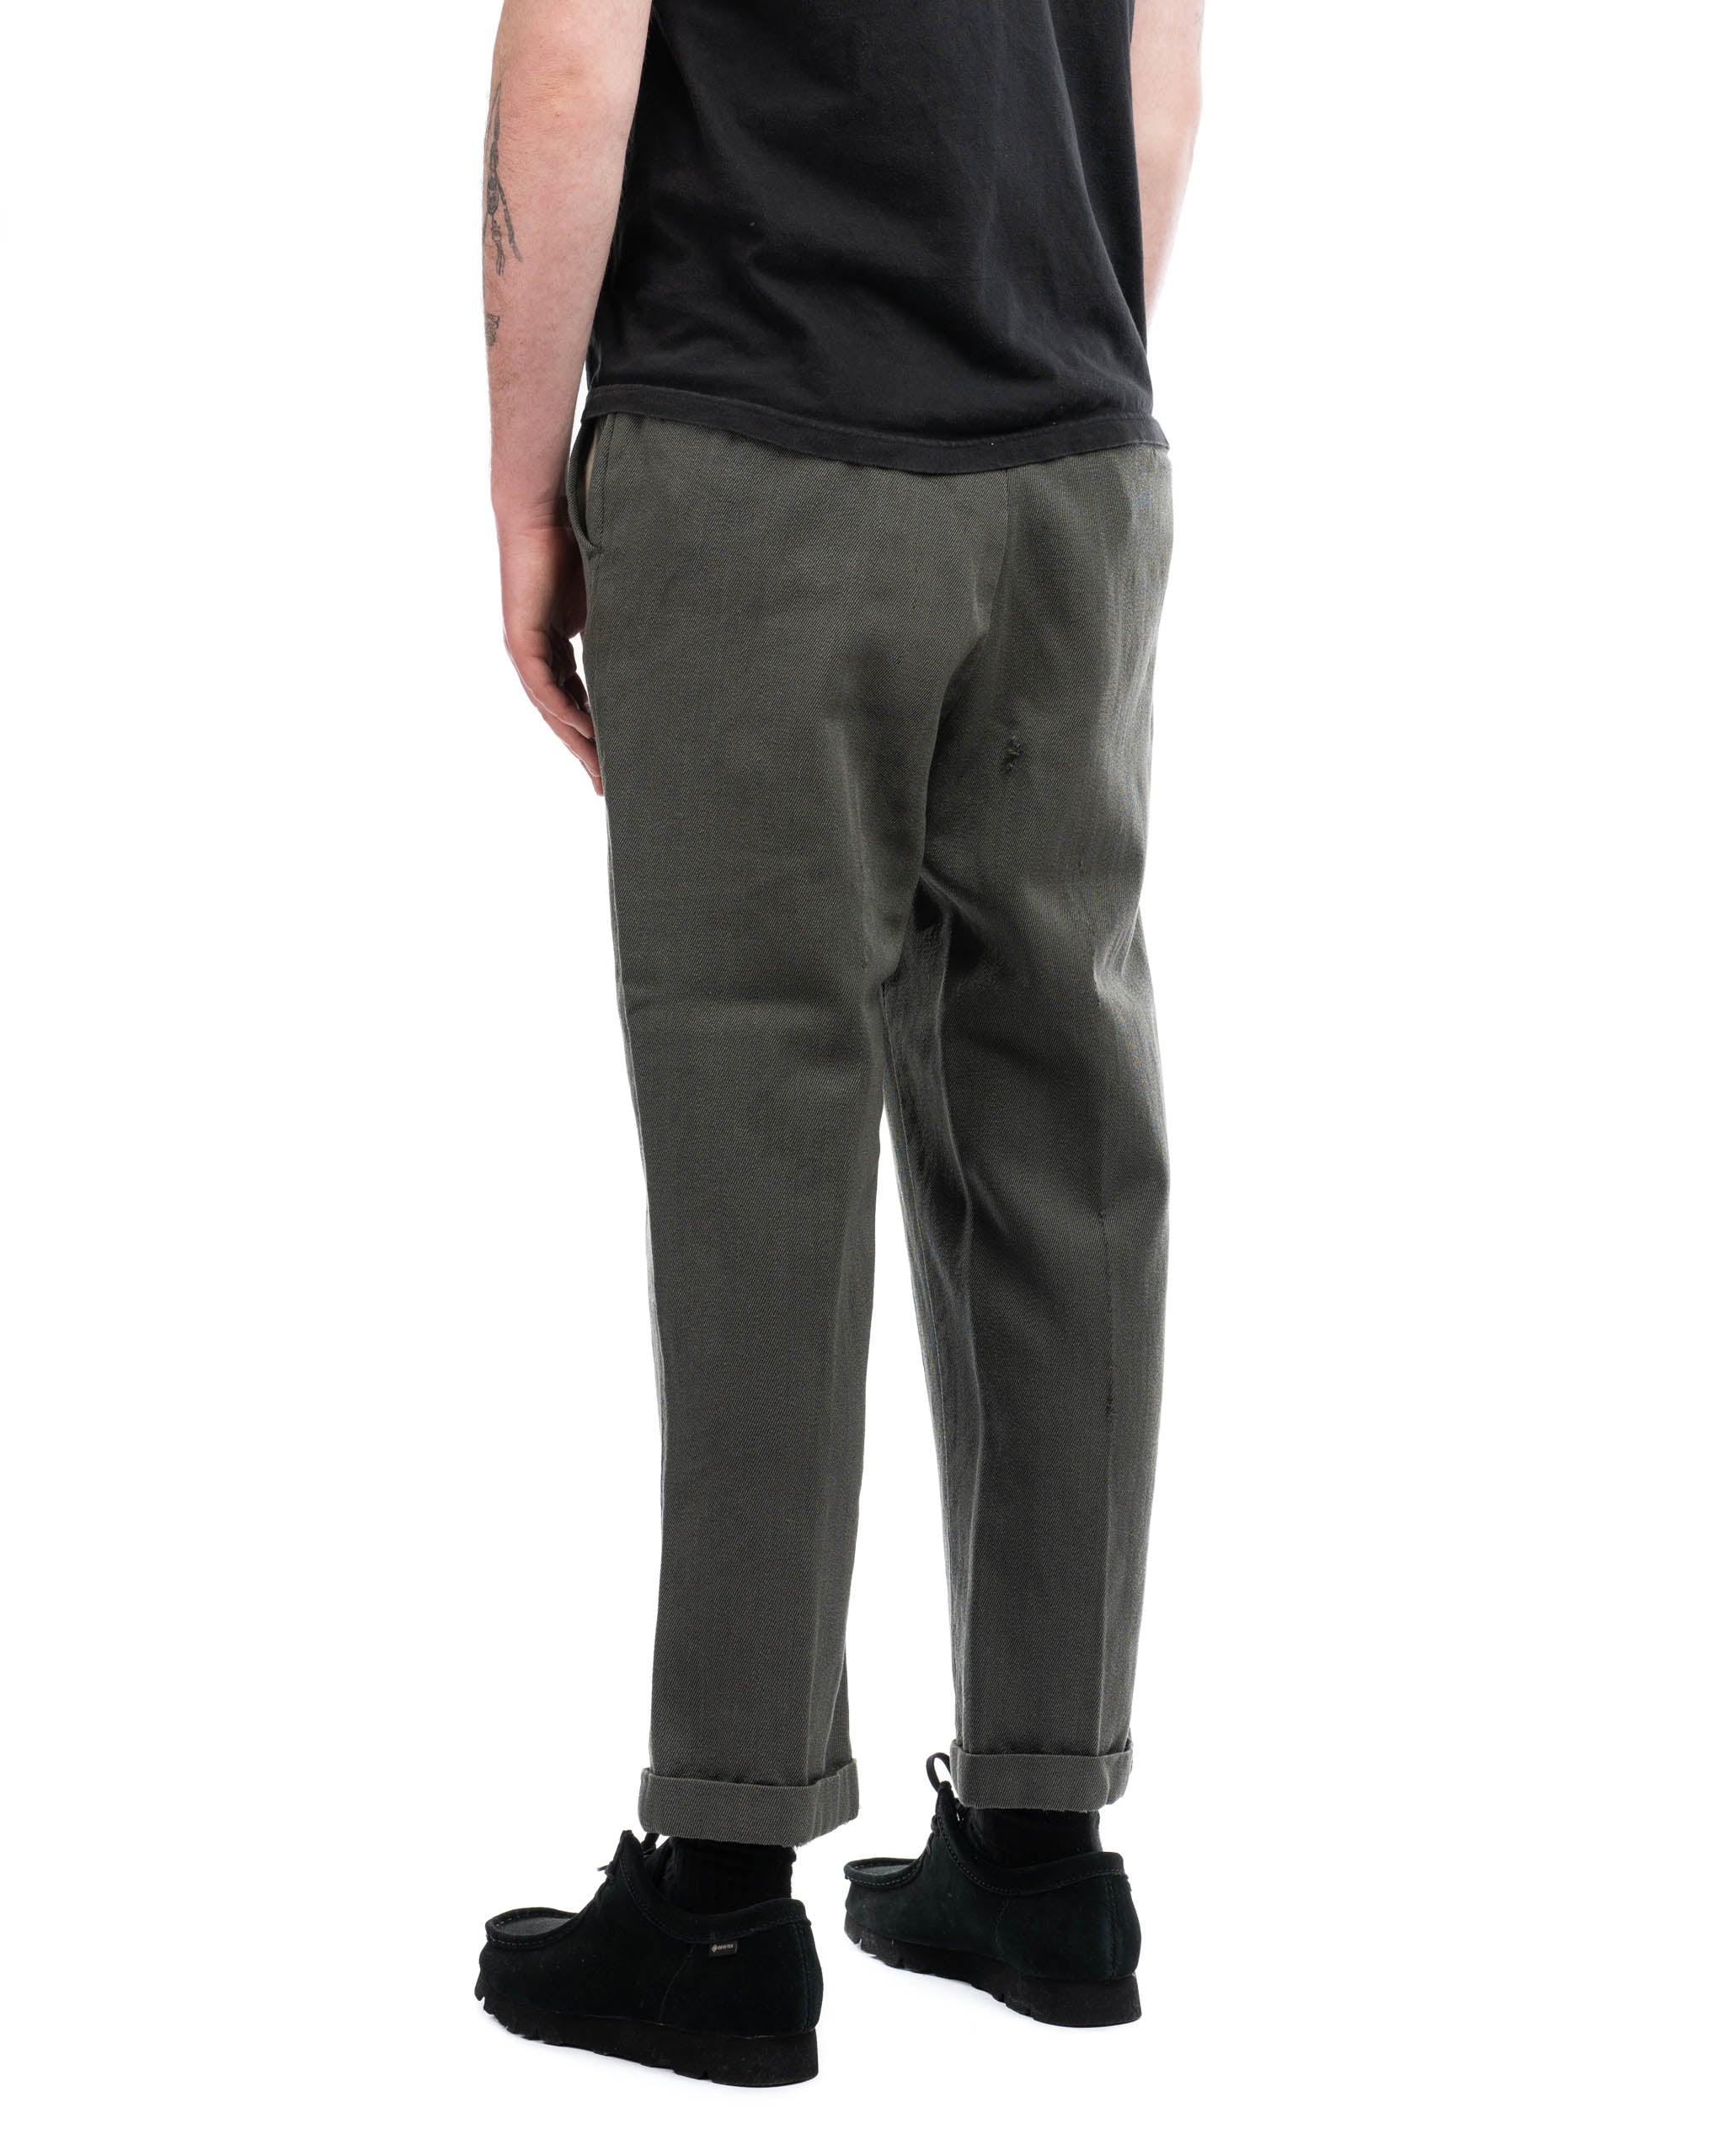 Uniqlo | Pants & Jumpsuits | Uniqlo Size M Waist 2829 Inches Brown Work  Trousers | Poshmark